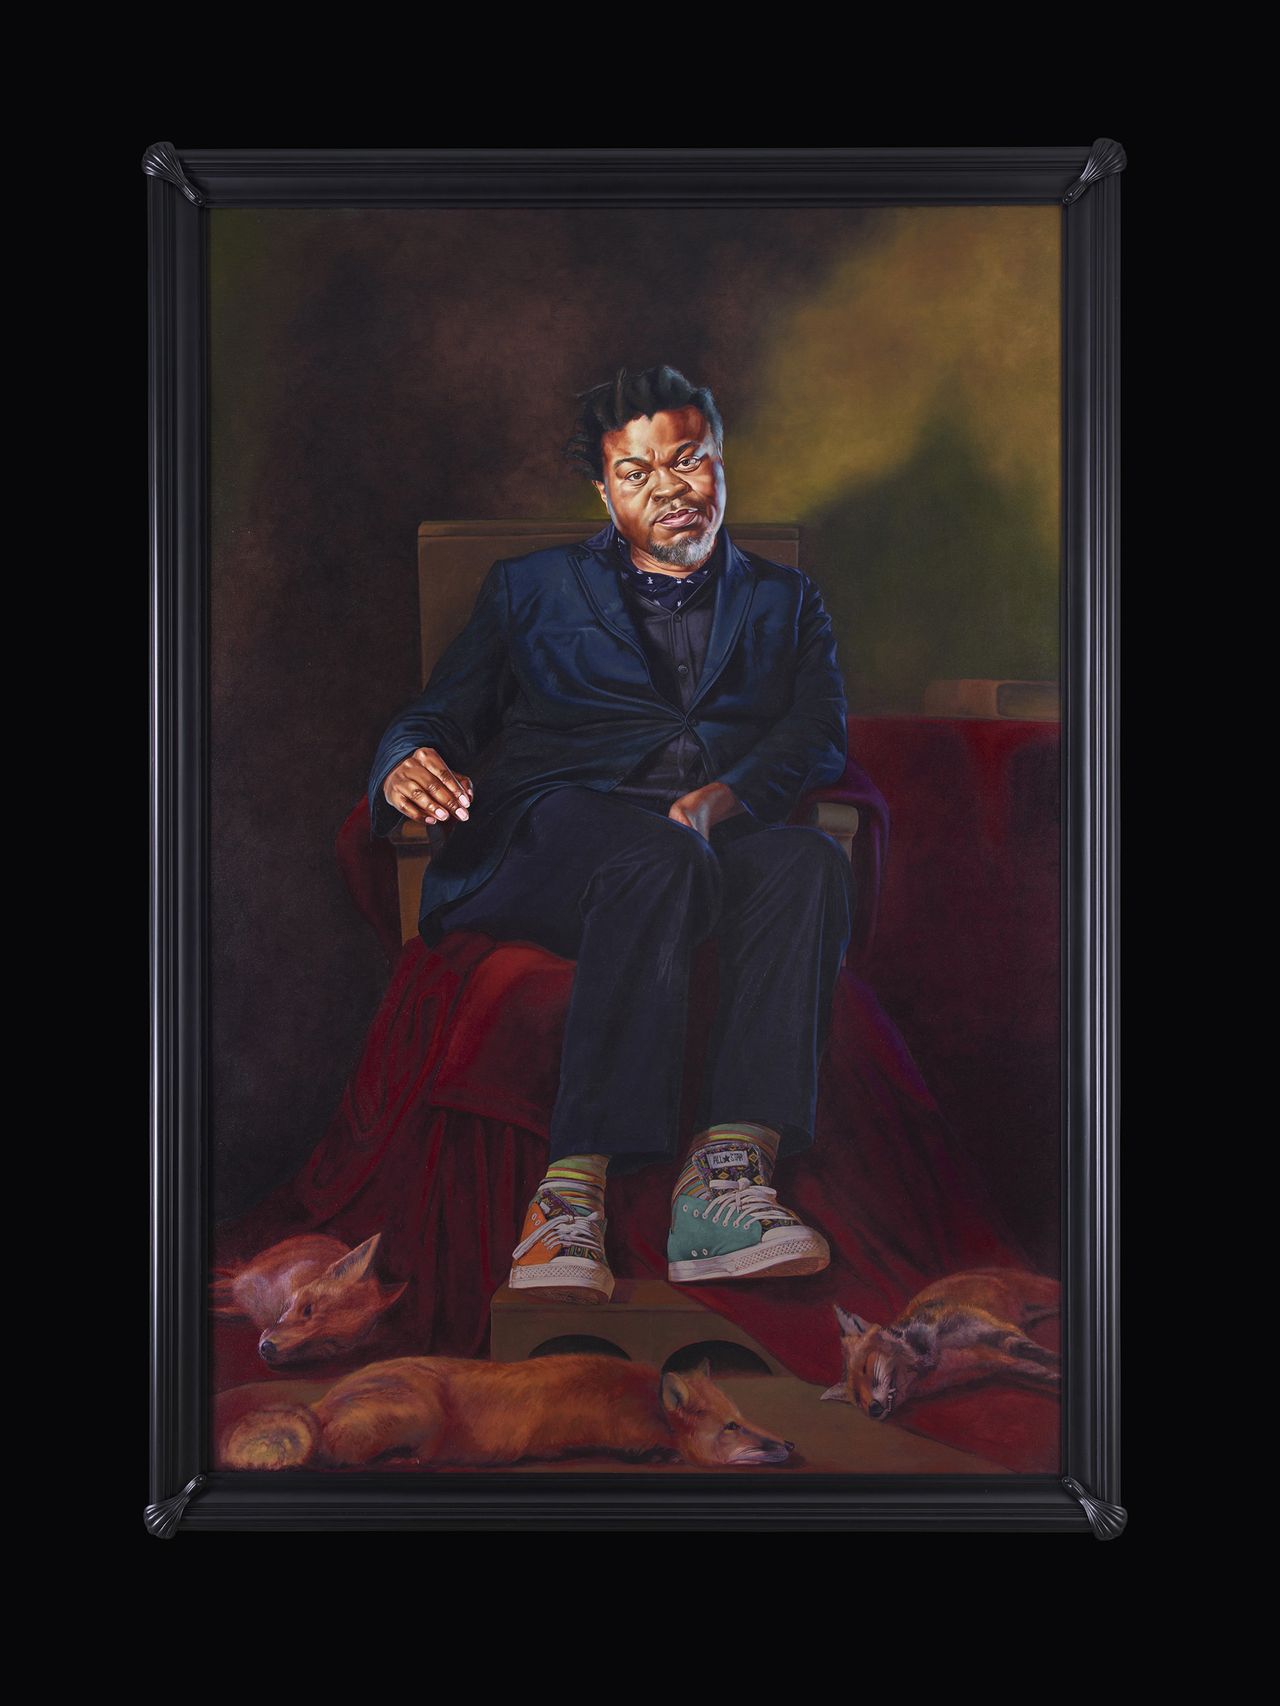 Kehinde Wiley, "Portrait of Yinka Shonibare, Reynard the Fox," 2017, oil on canvas